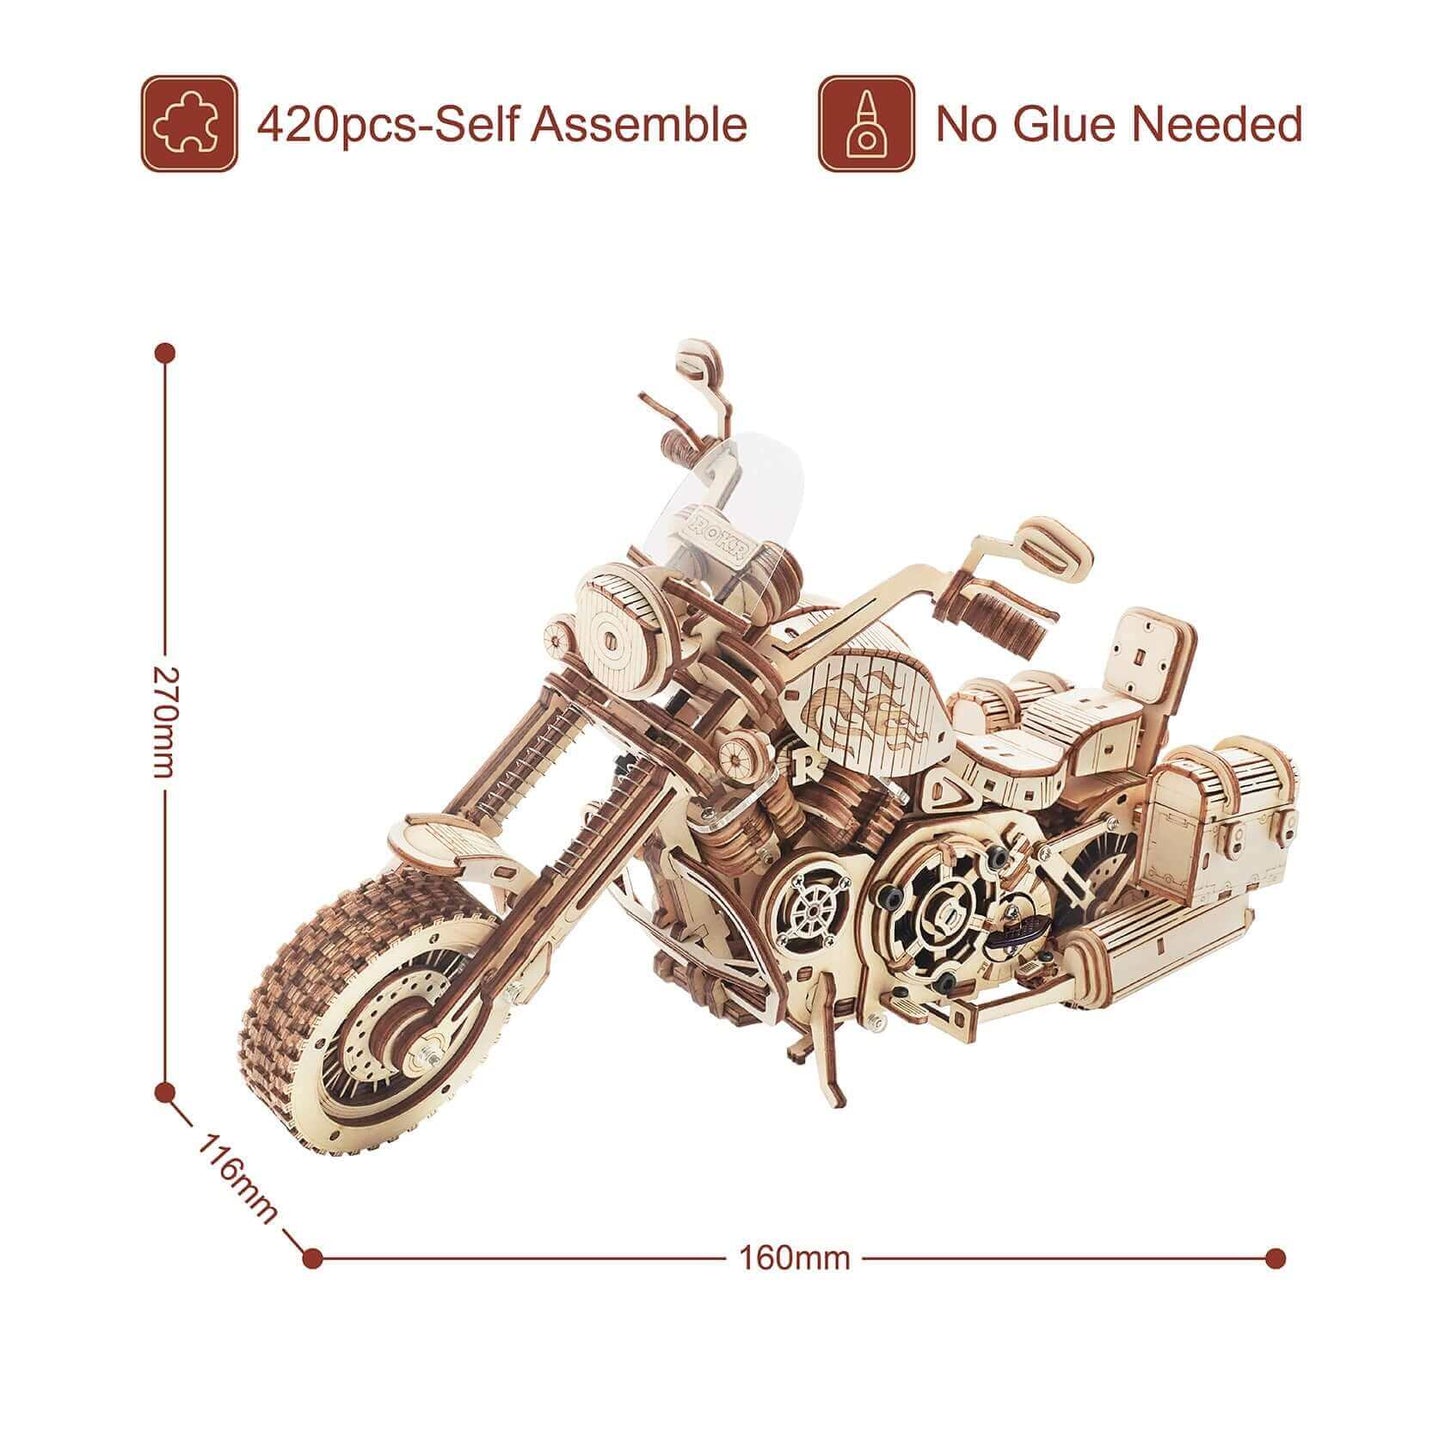 Robotime Rokr LK504クルーザーオートバイDIYアセンブリおもちゃ: 420ピース木製モデルビルディングキット大人と子供のための理想的なギフト